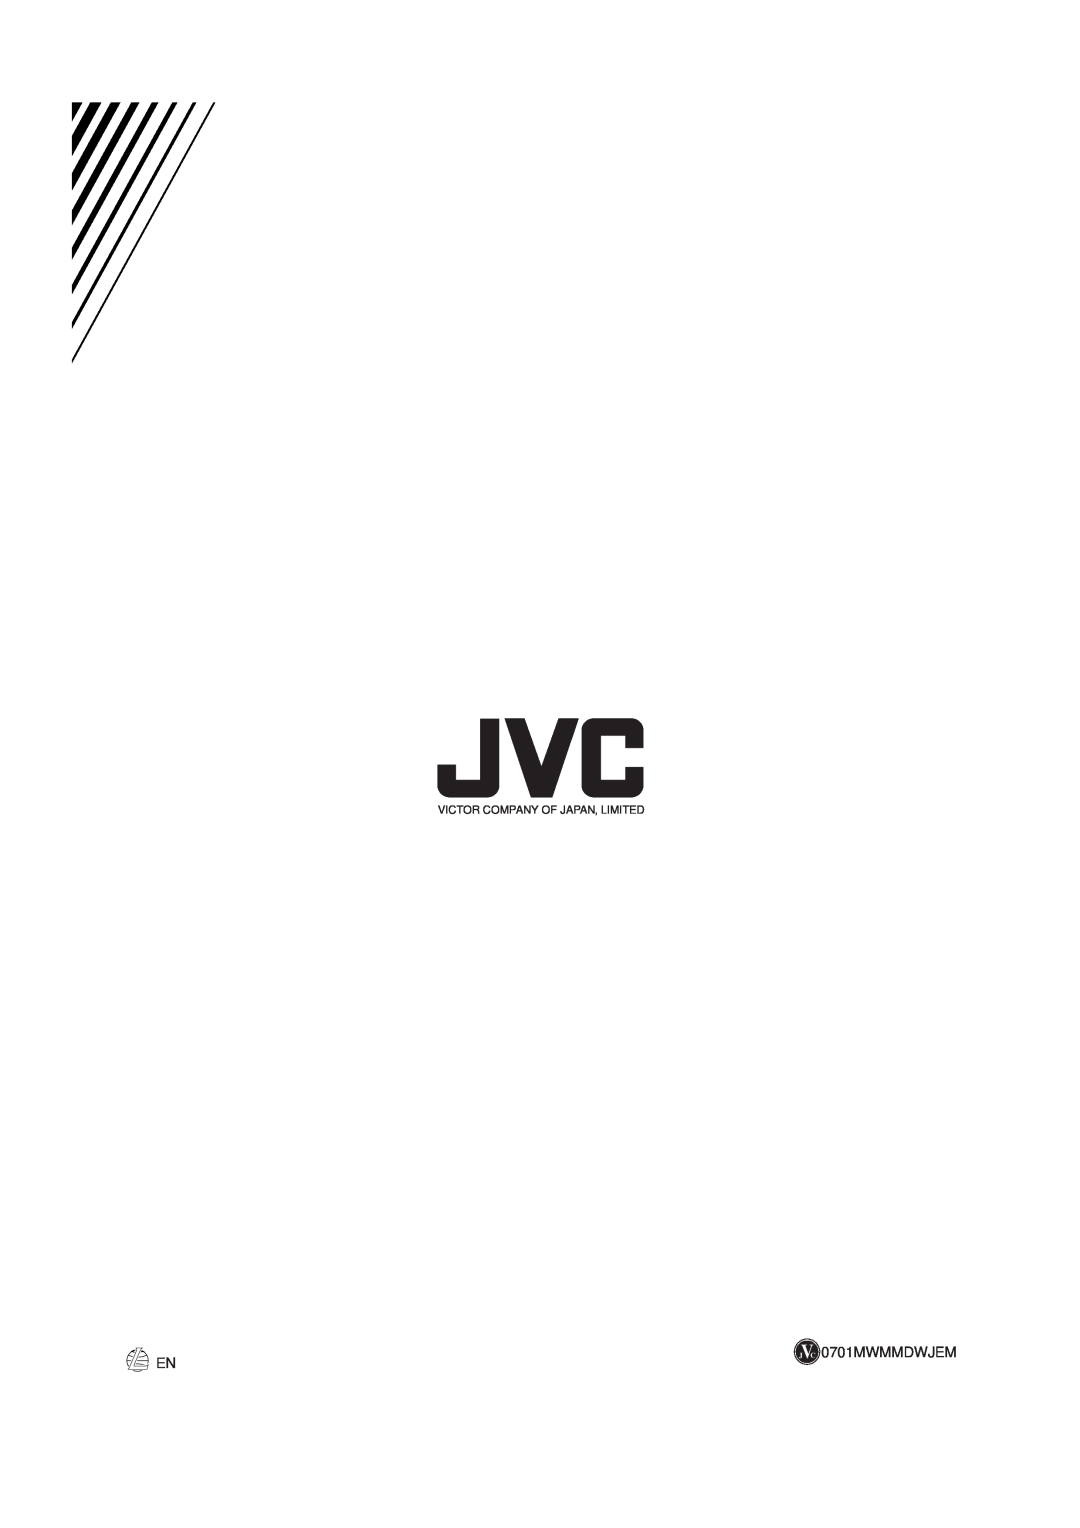 JVC LVT0749-003A, CA-NXCDR7R manual JVC 0701MWMMDWJEM, Victor Company Of Japan, Limited 